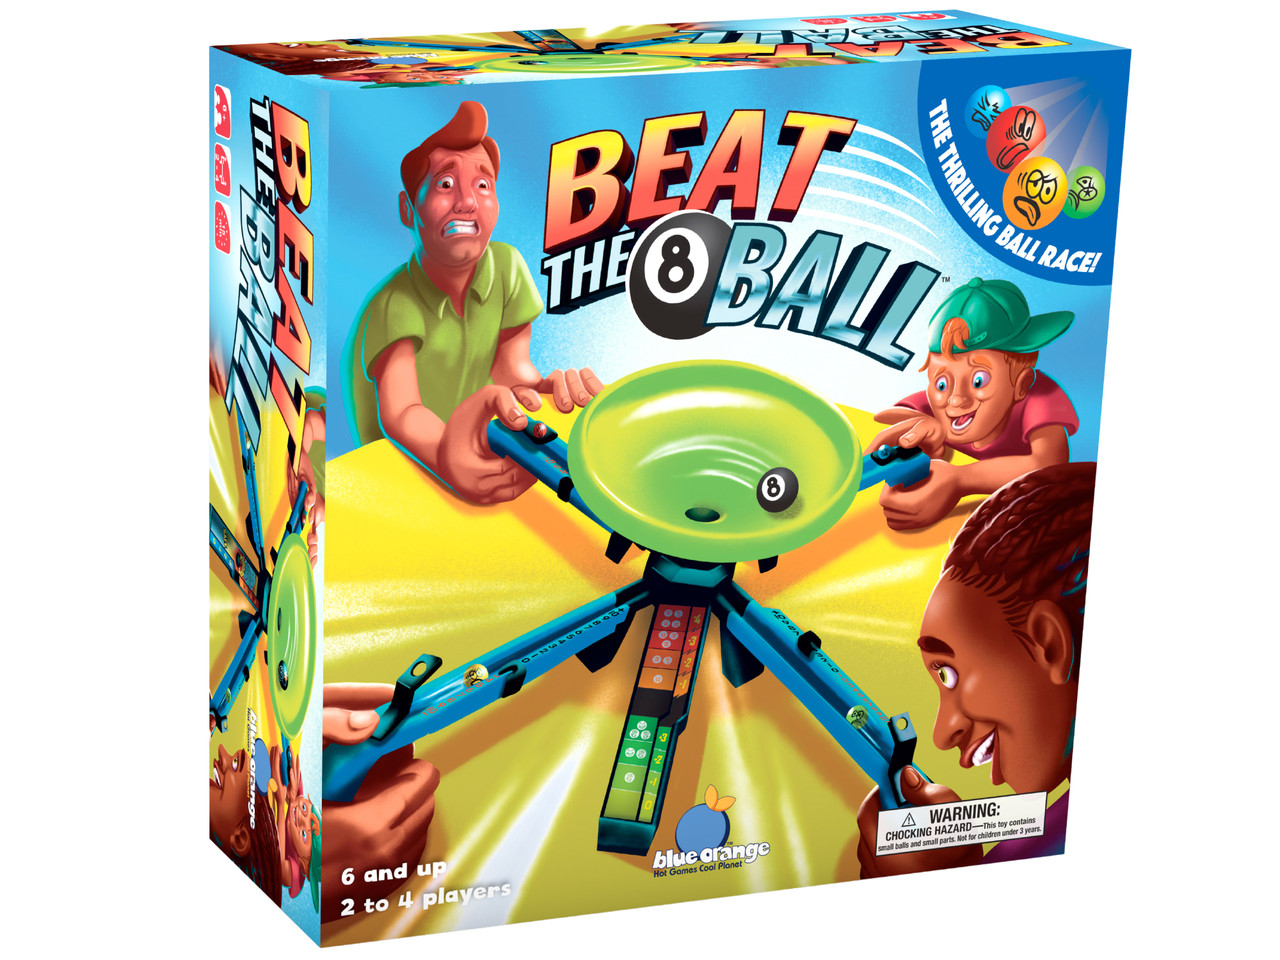  Mattel Games Magic 8 Ball: Mini : Toys & Games